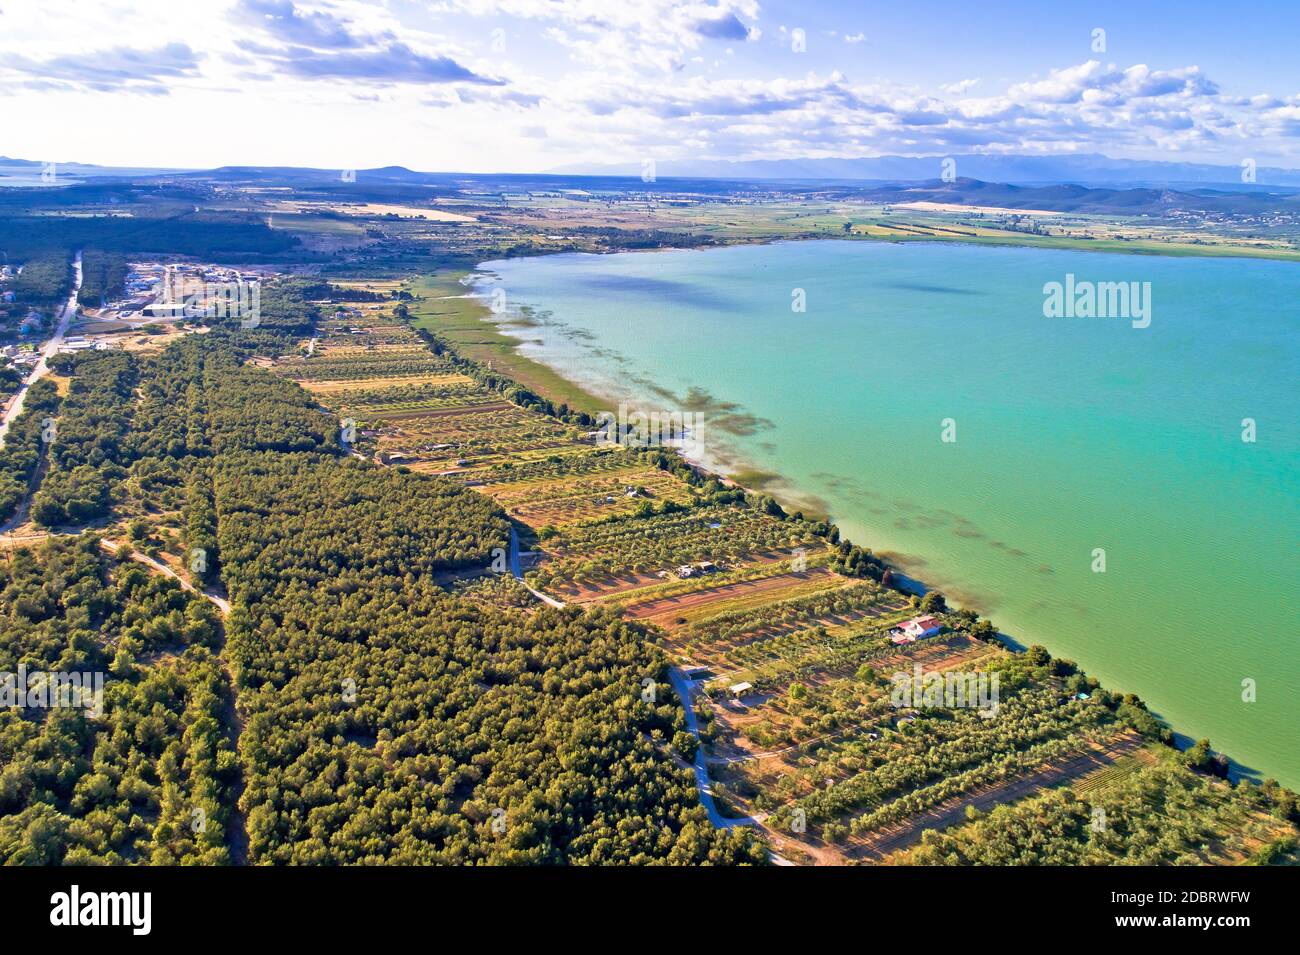 Vransko lake and landscape aerial view, Dalmatia region of Croatia Stock Photo